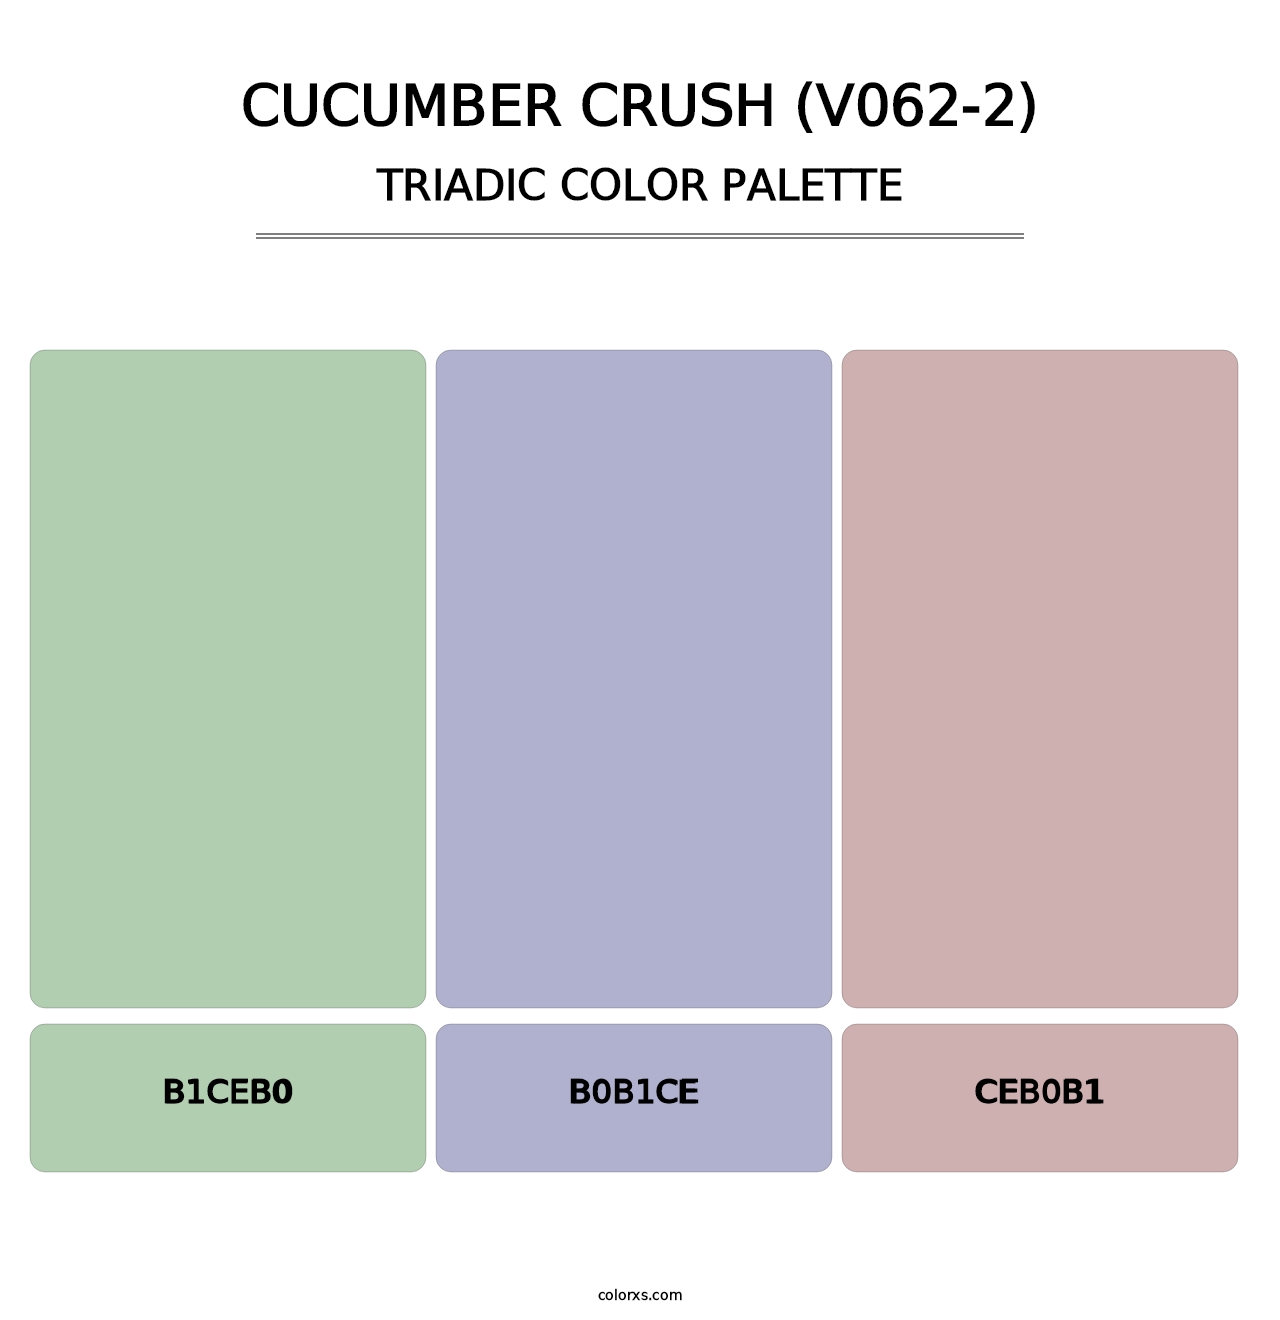 Cucumber Crush (V062-2) - Triadic Color Palette